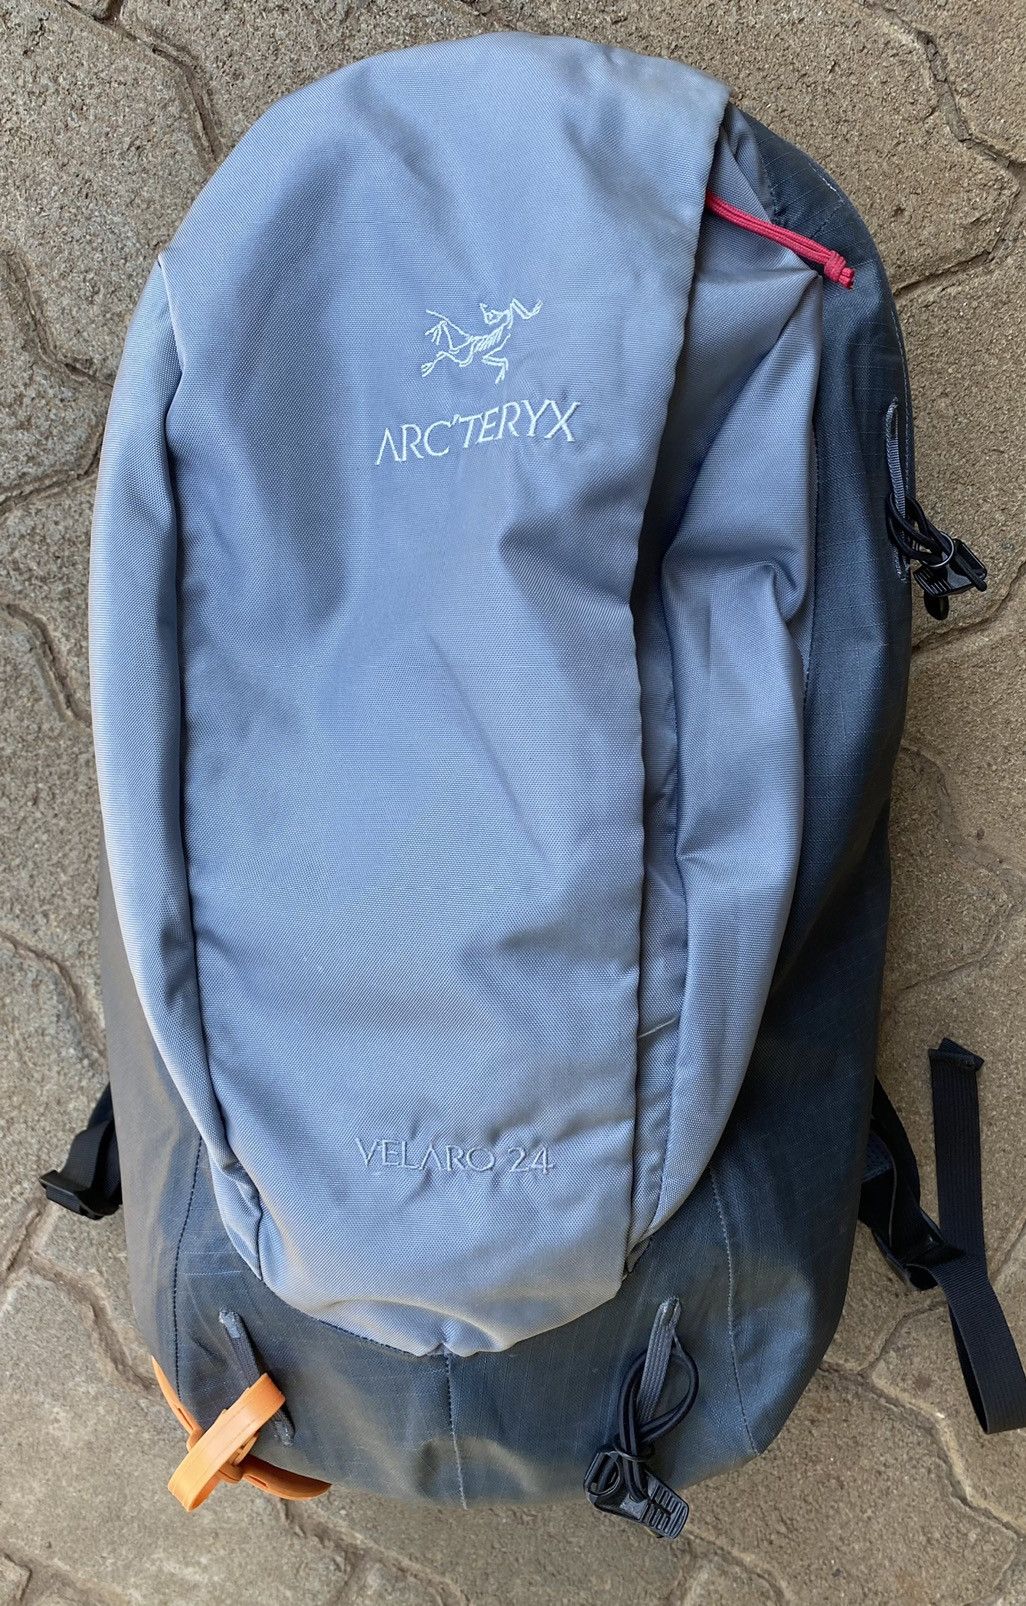 Arc'Teryx Arc'teryx x Velaro  waterproof Backpack Bag   Grailed